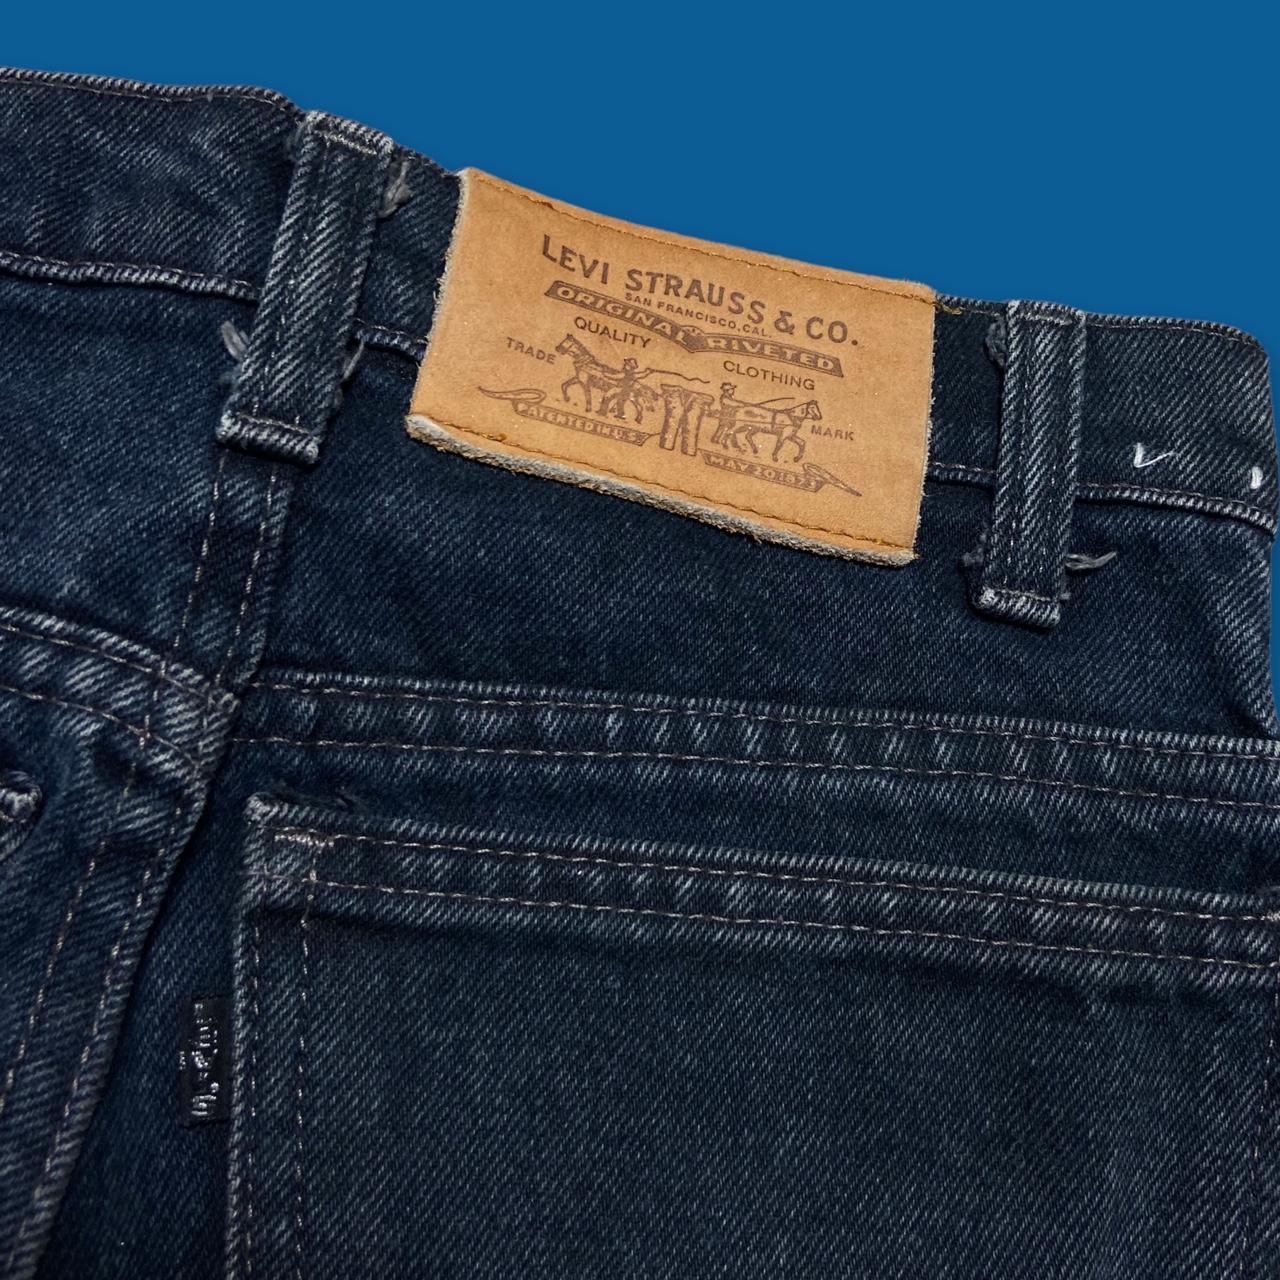 Vintage 80s 1989 Levi’s 575 denim jeans. Black tab... - Depop